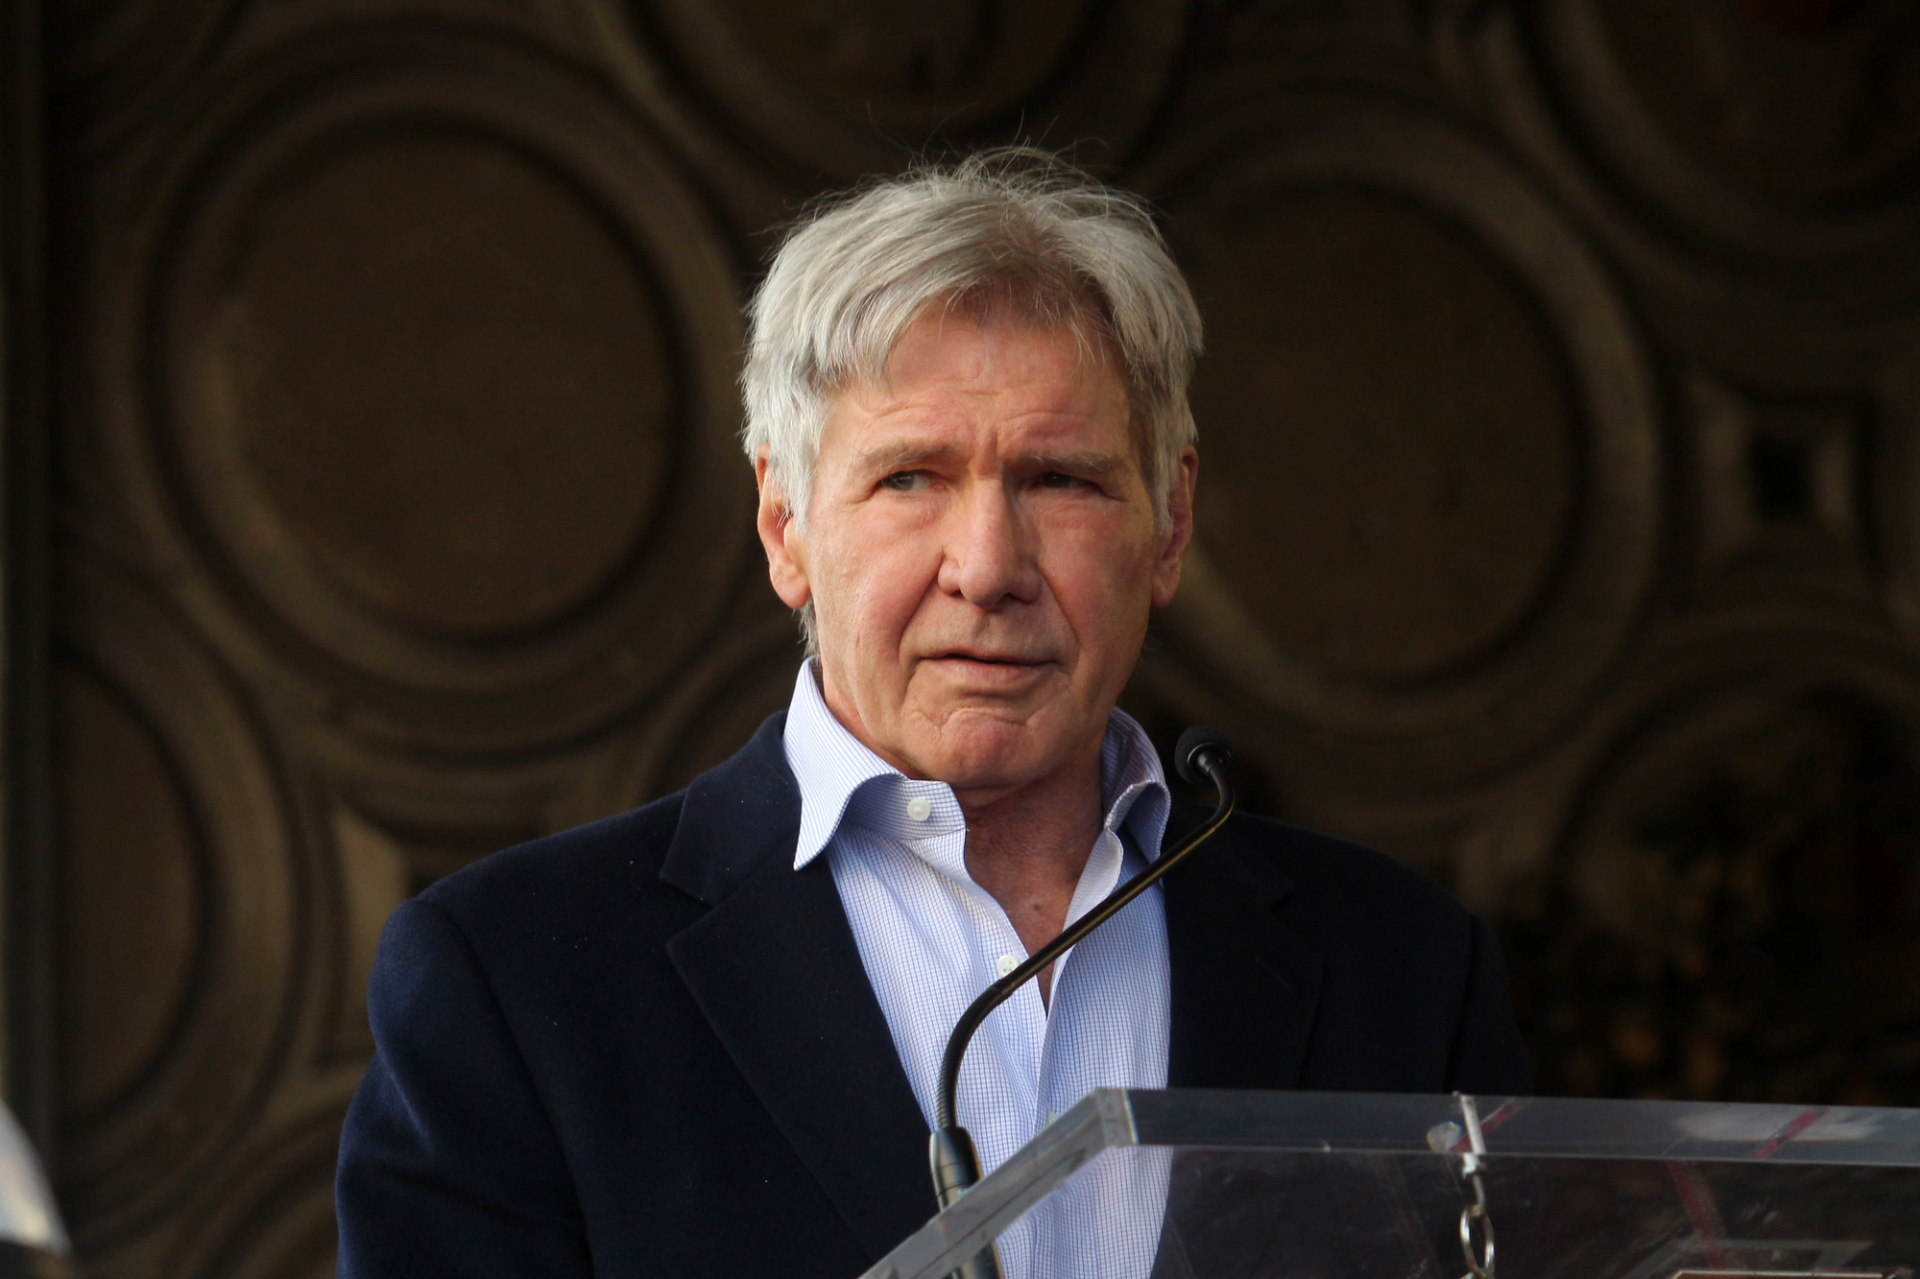 Harrison Ford mégis visszavonul?